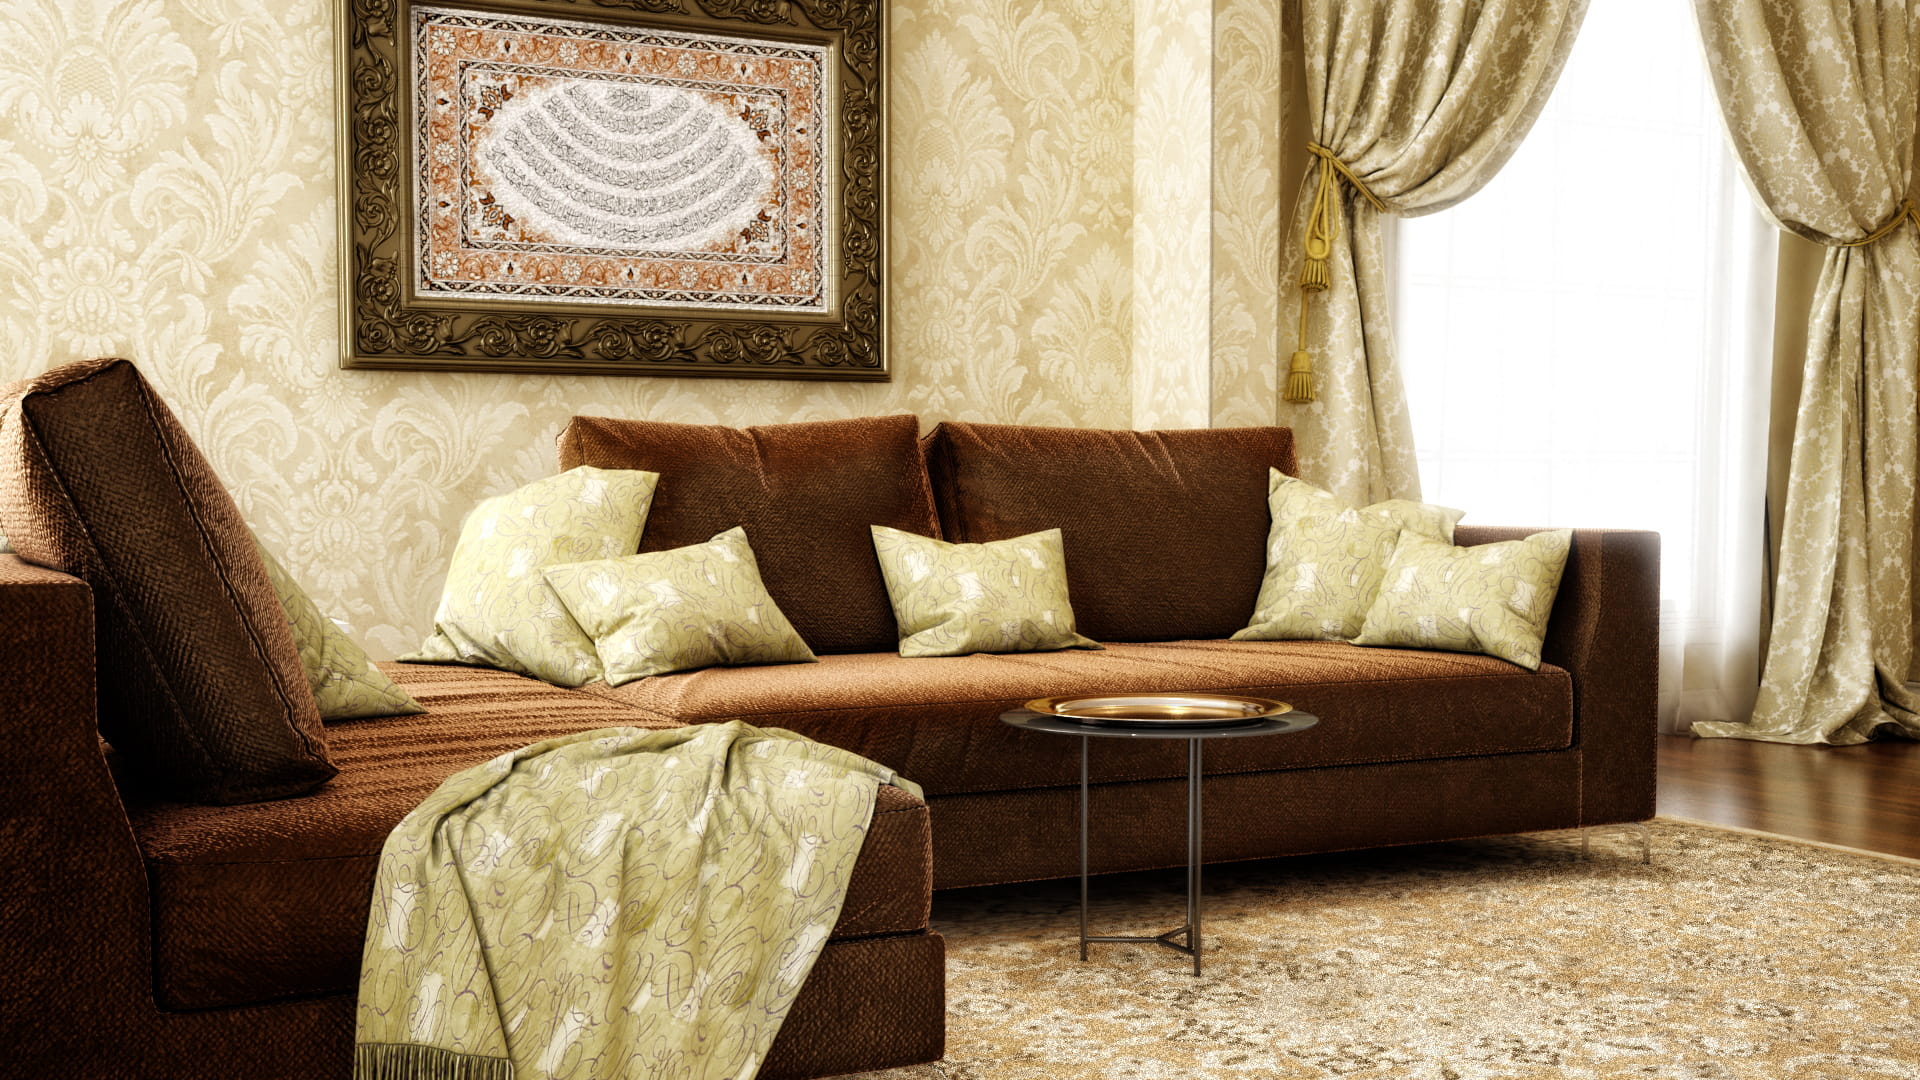 persian-interior-room